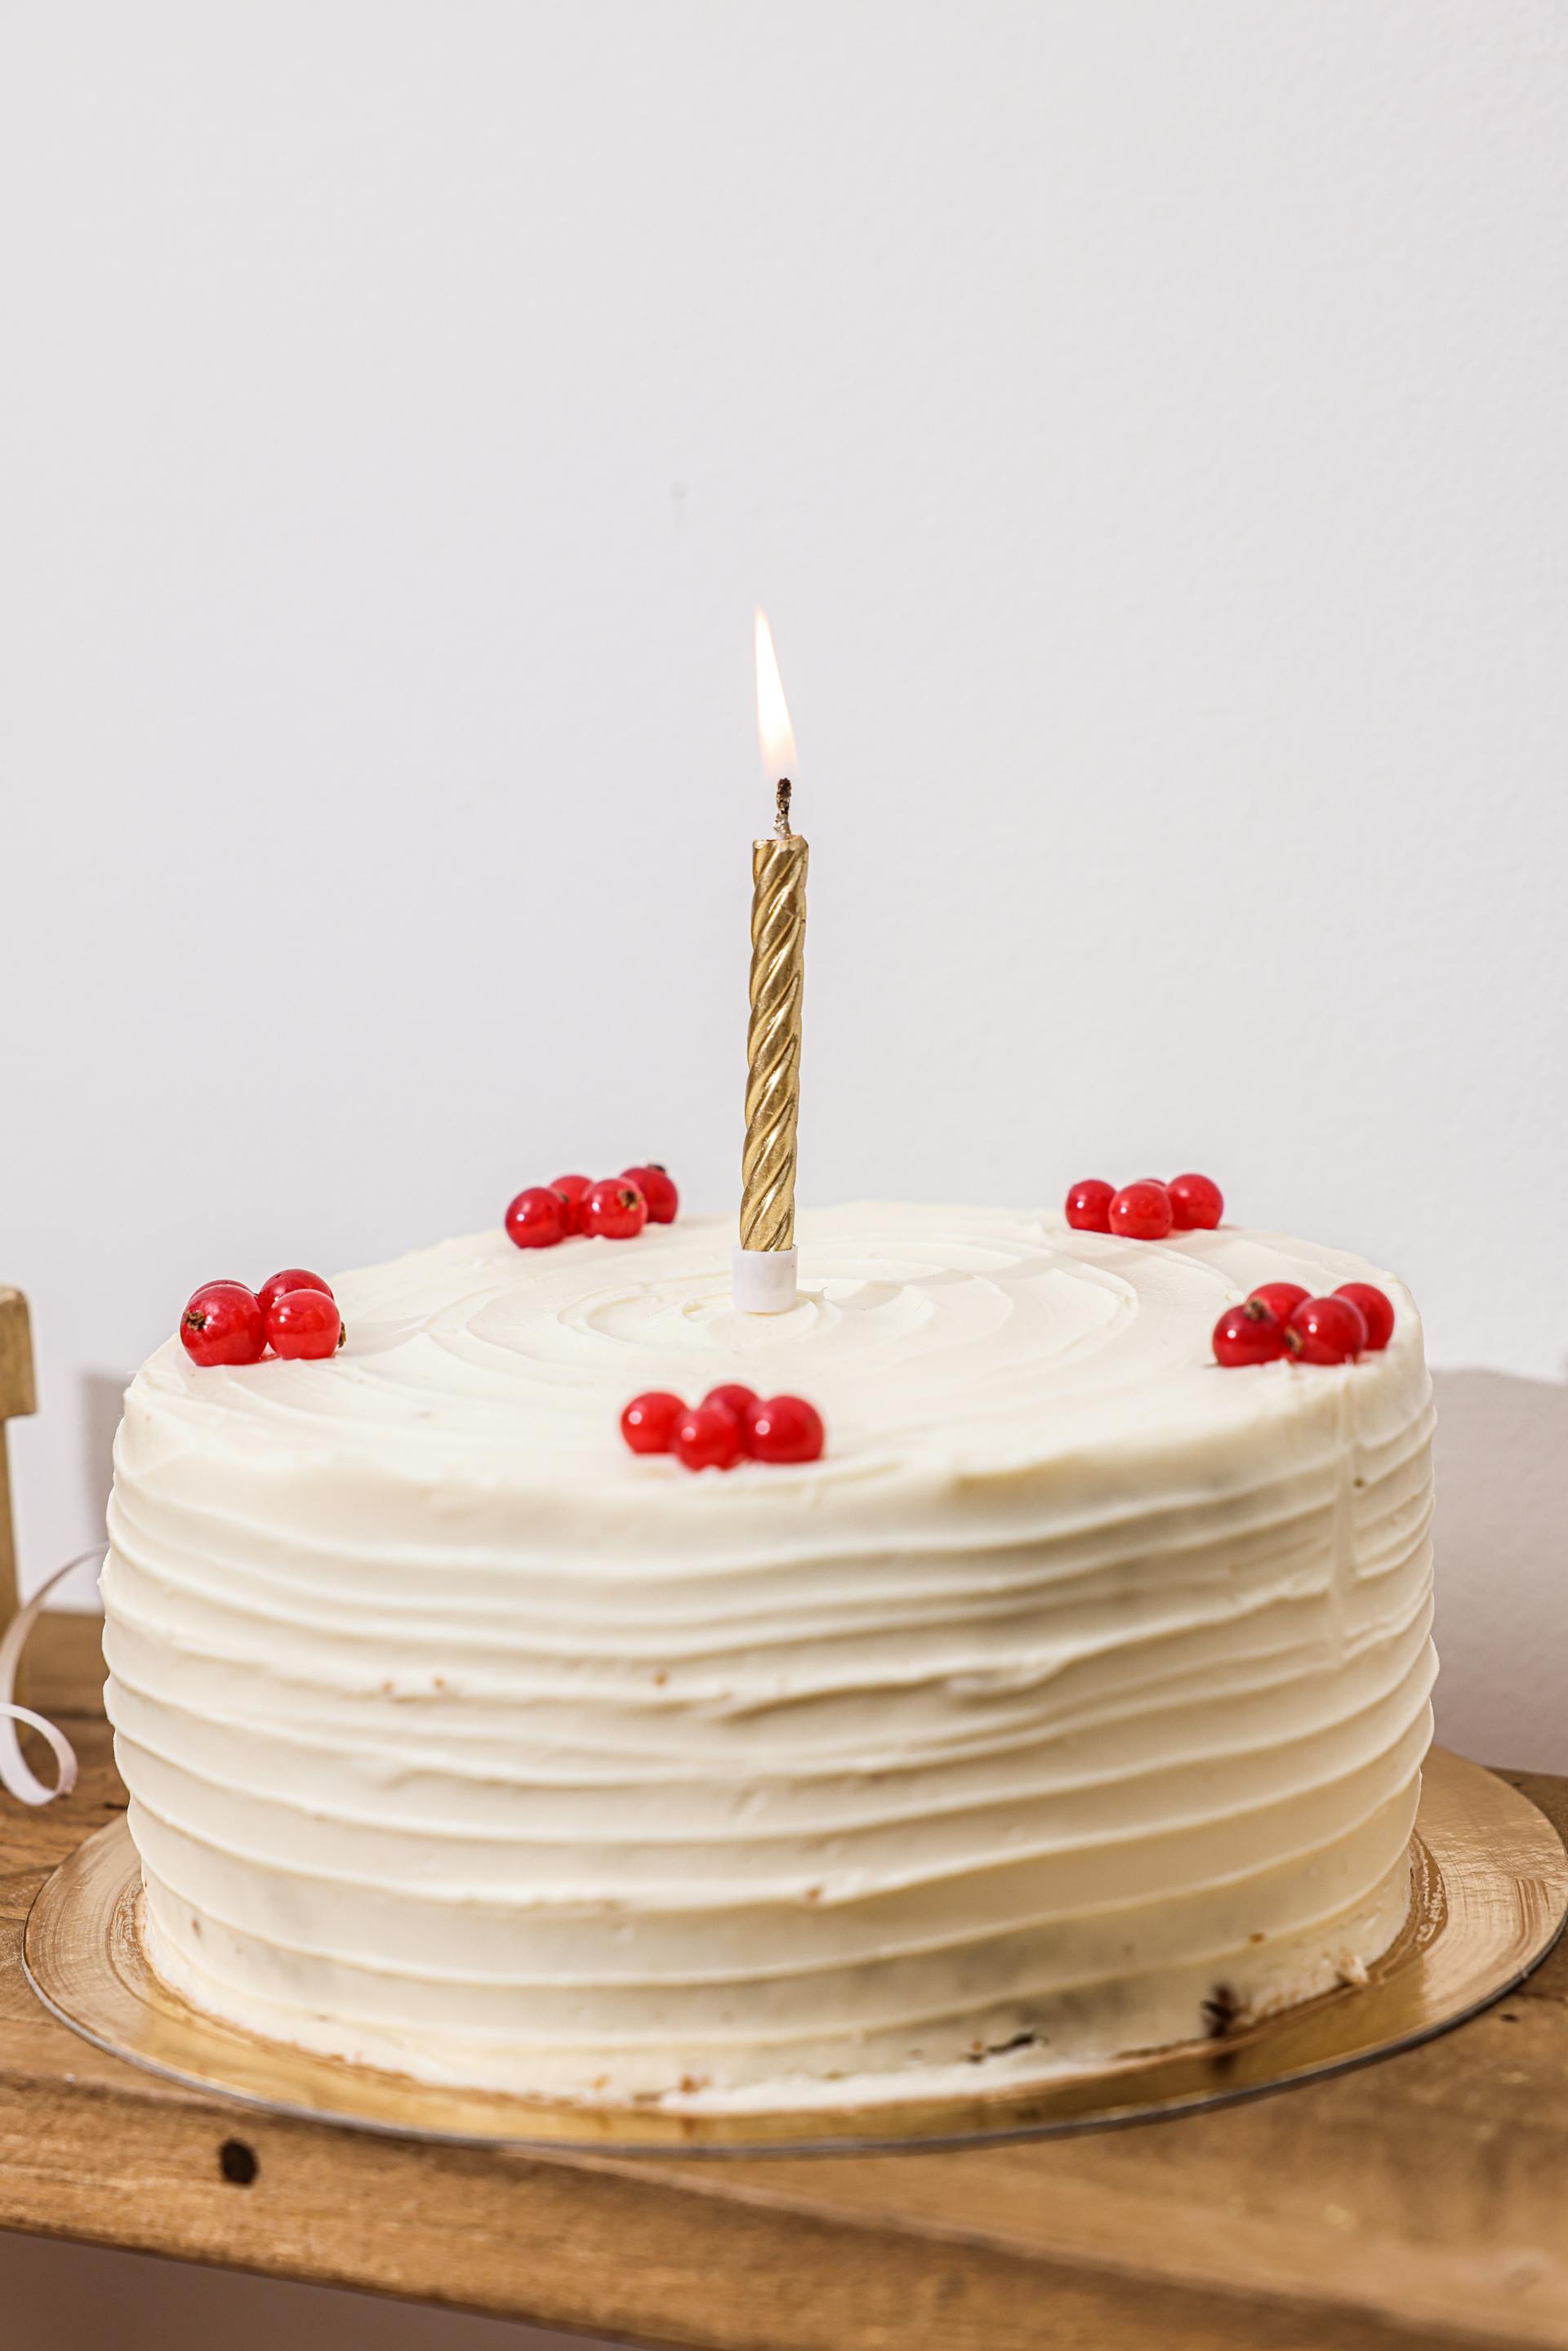 A birthday cake | Source: Pexels